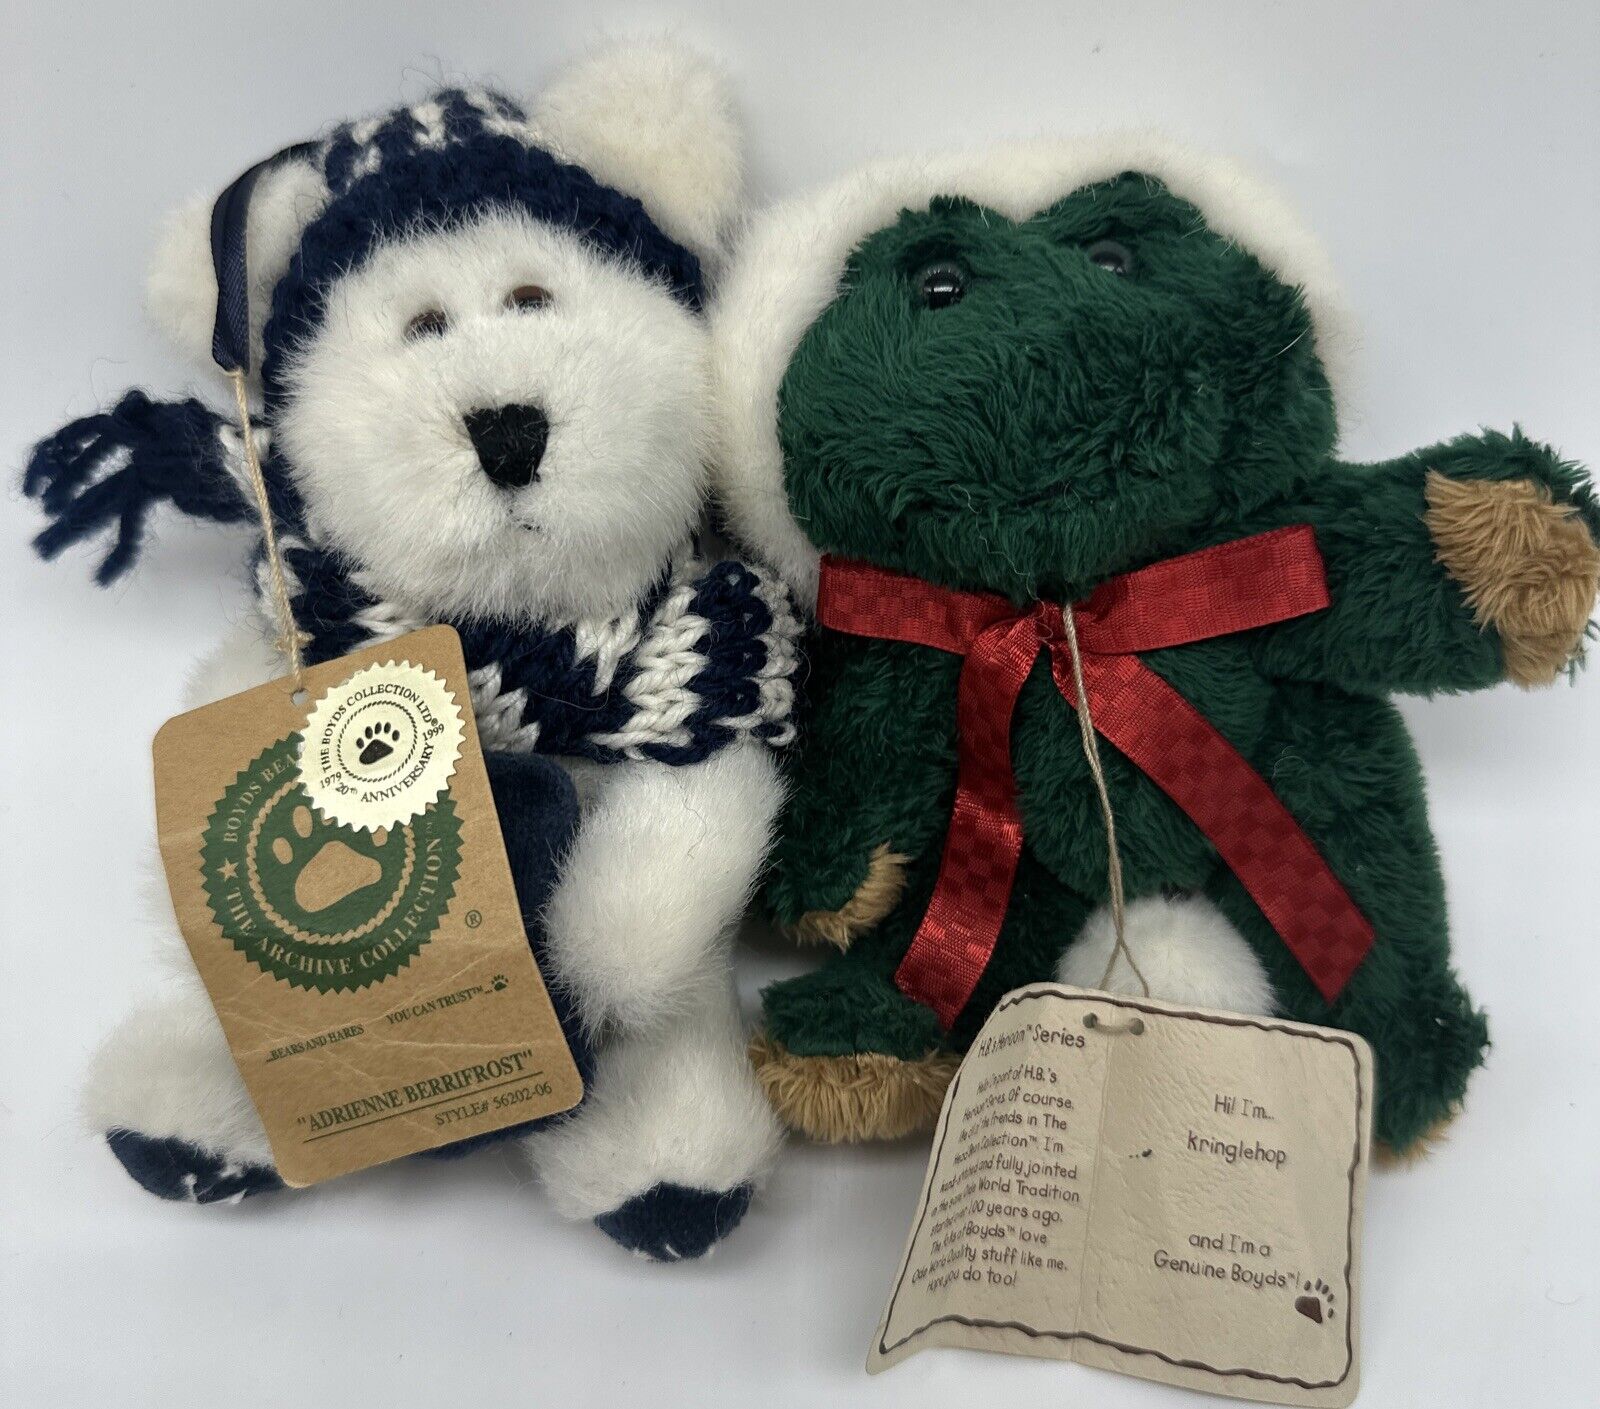 2 Boyds Plush Christmas Ornaments~ Kringlehop Frog & Adrienne Berrifrost Bear